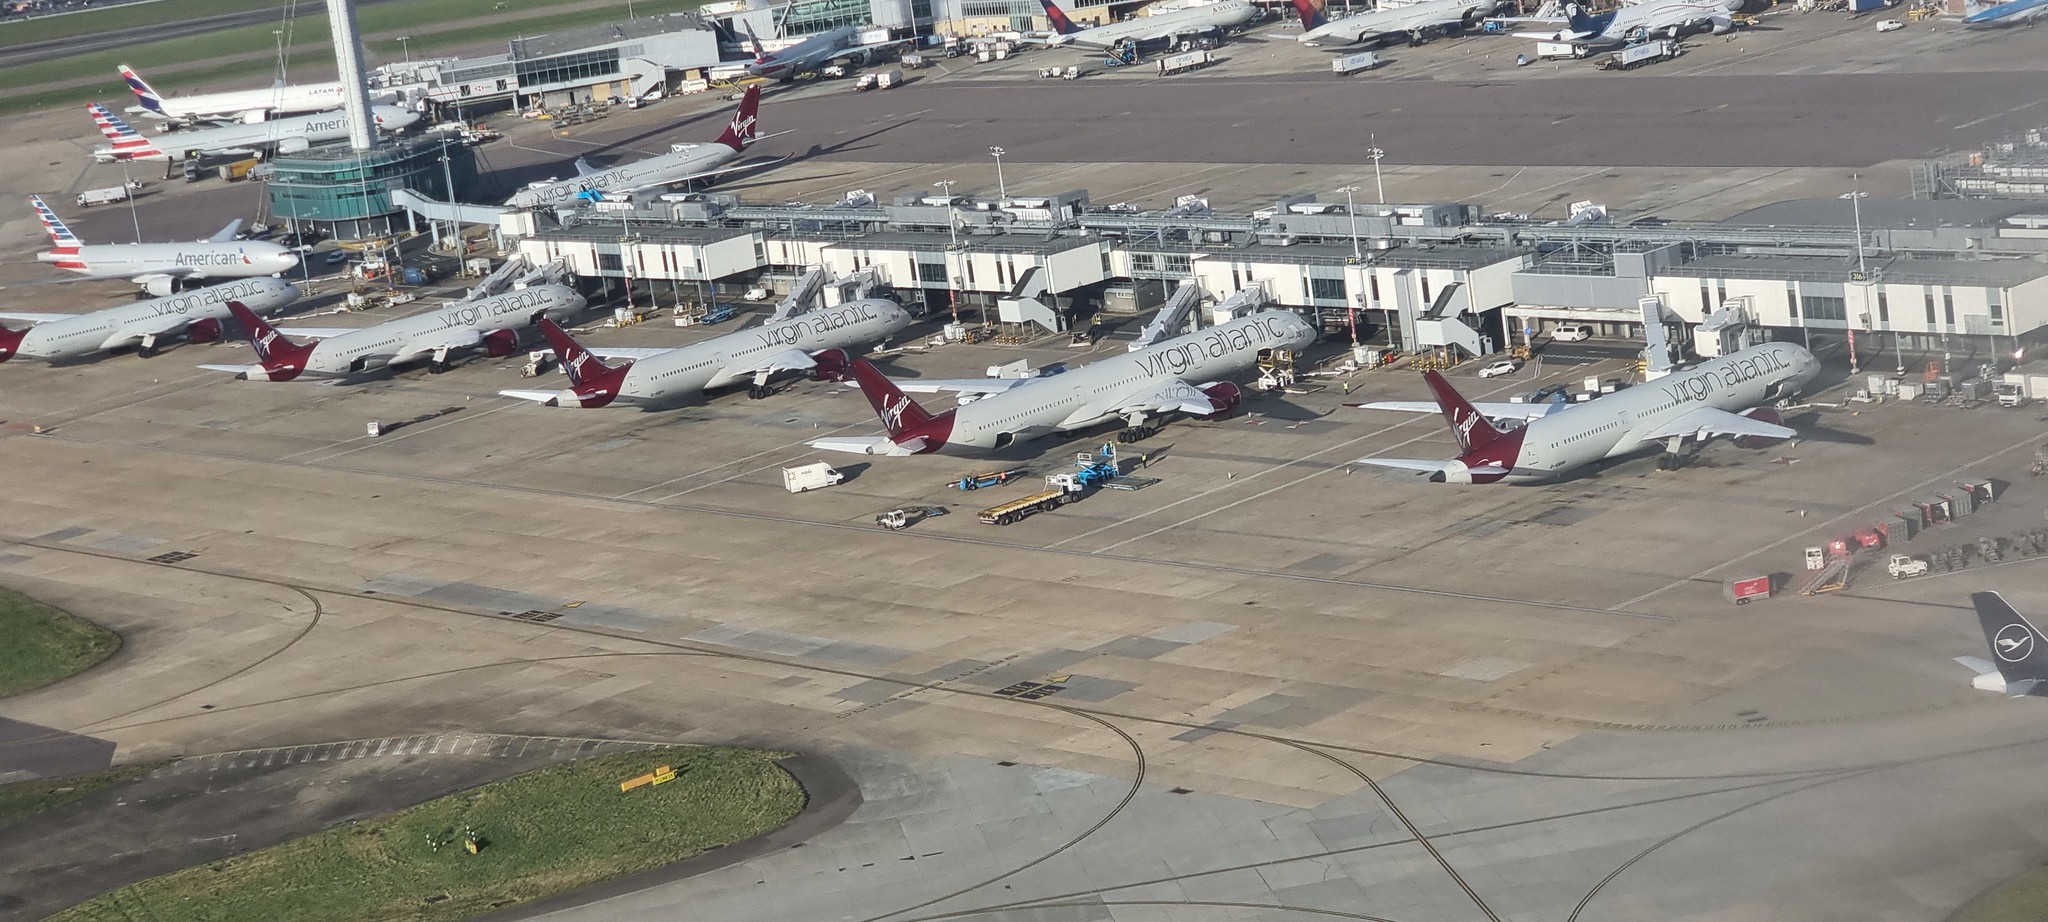 A collection of Virgin aircraft at gates at Heathrow